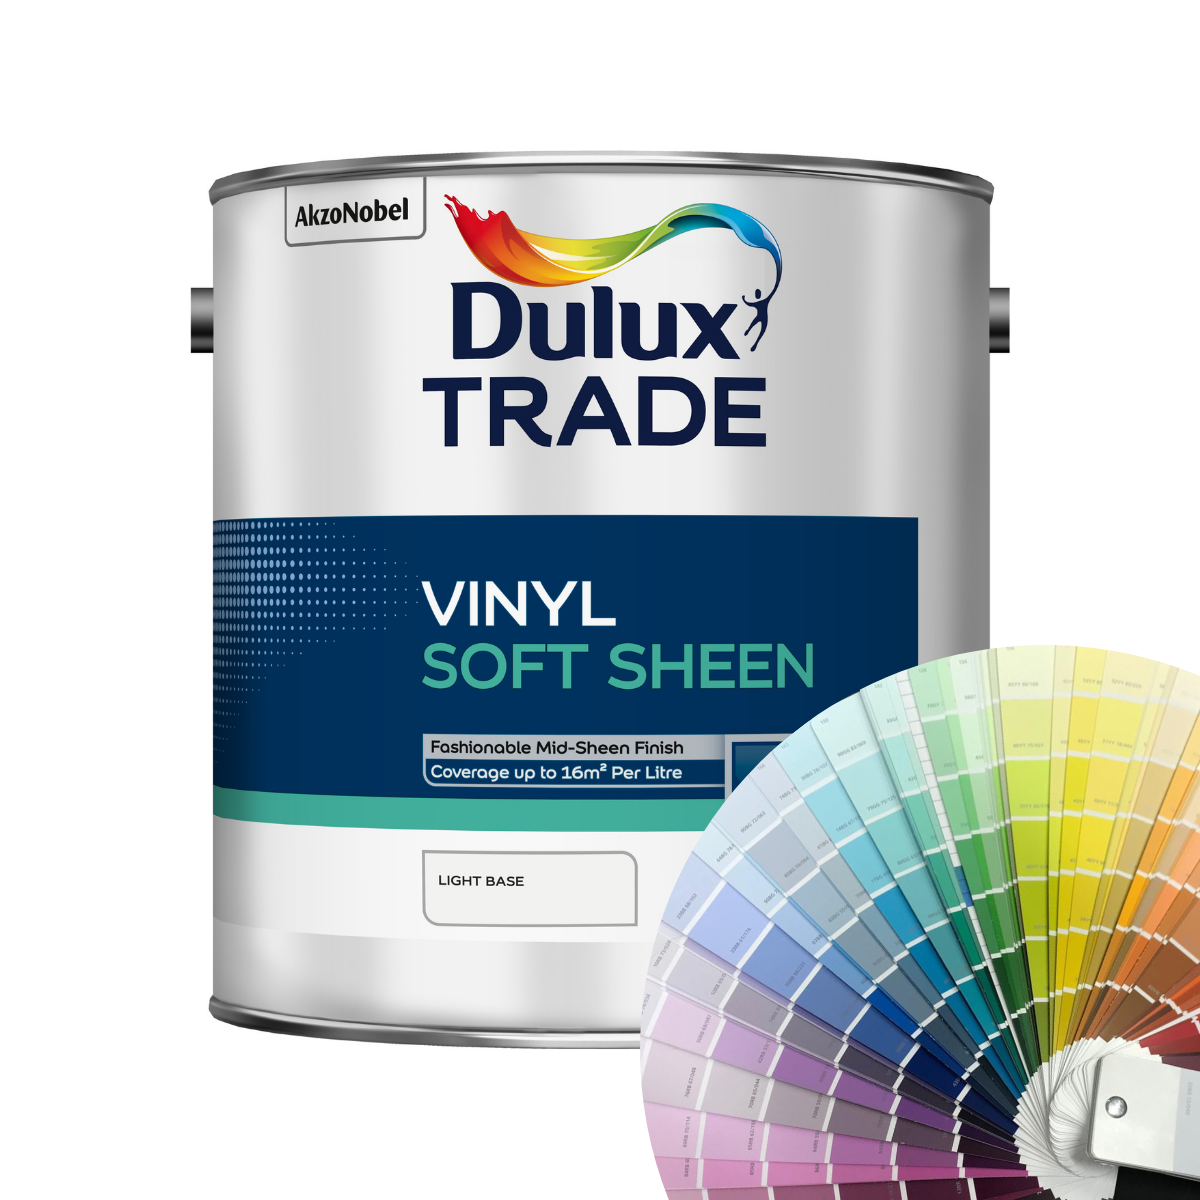 Dulux Trade Vinyl Soft Sheen - Tinted Colour